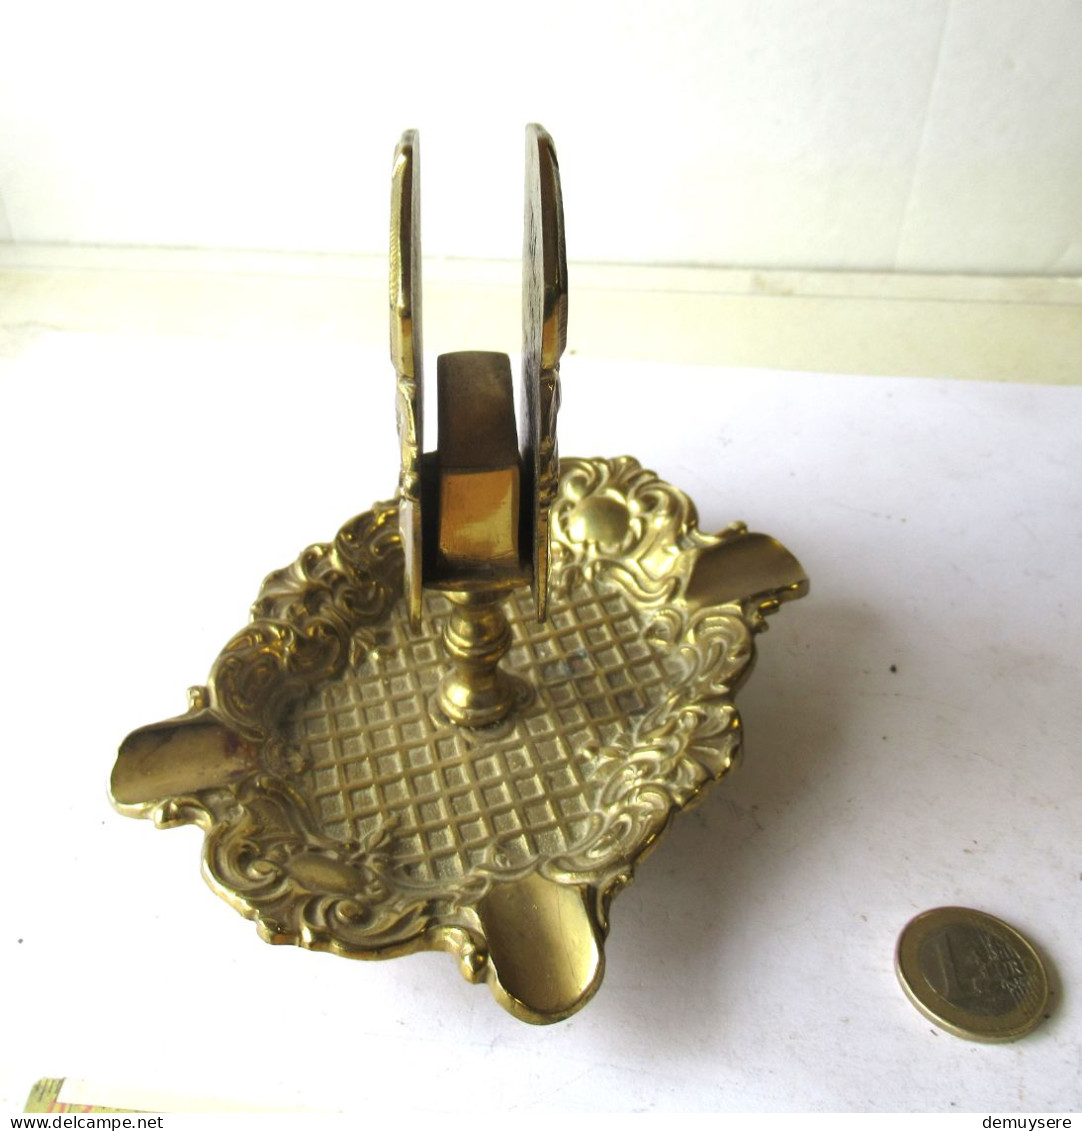 Lade 2000 - Bronzen Asbak Met Luciferhouder - Cendrier En Bronze Avec Porte Allumettes - 500 Gram - Bronzi